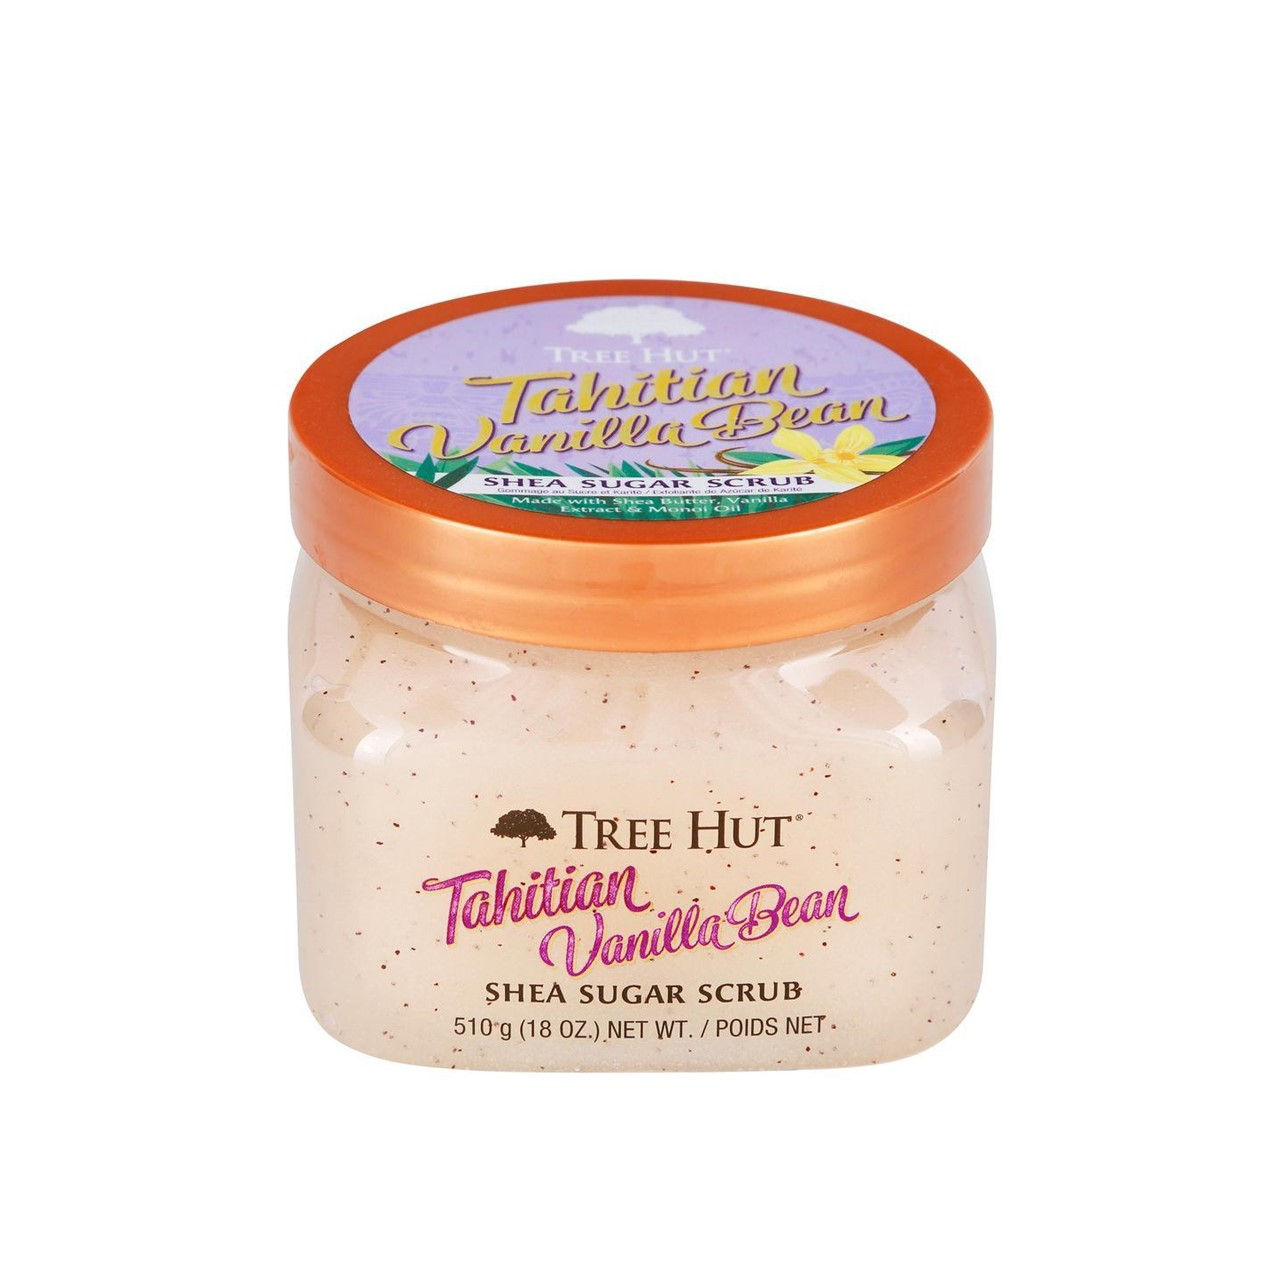 https://static.beautytocare.com/media/catalog/product/t/r/tree-hut-tahitian-vanilla-bean-shea-sugar-scrub-510g_1.jpg